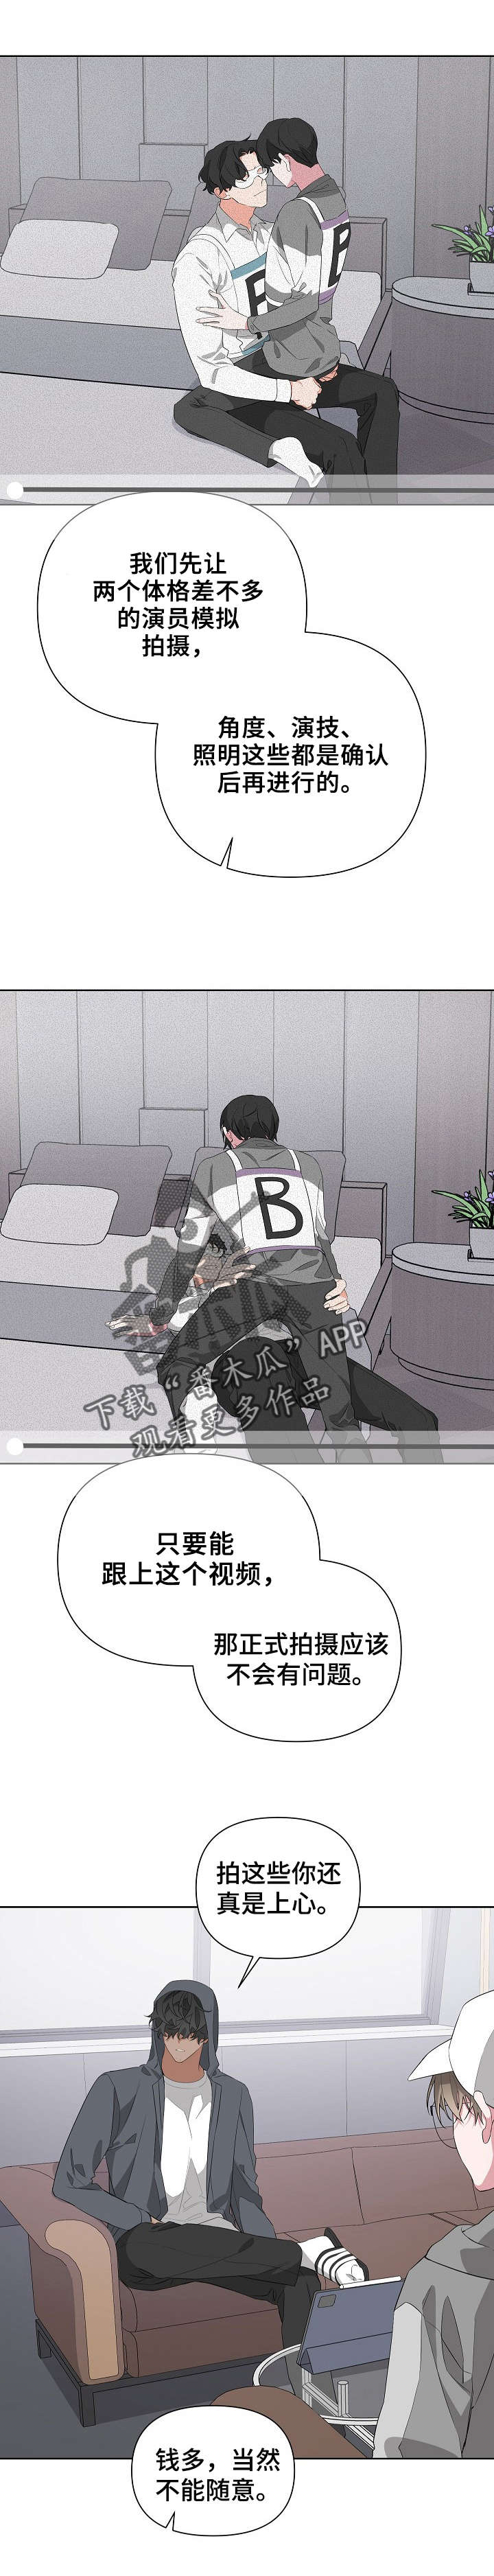 Bedeuro-第17章模拟全彩韩漫标签